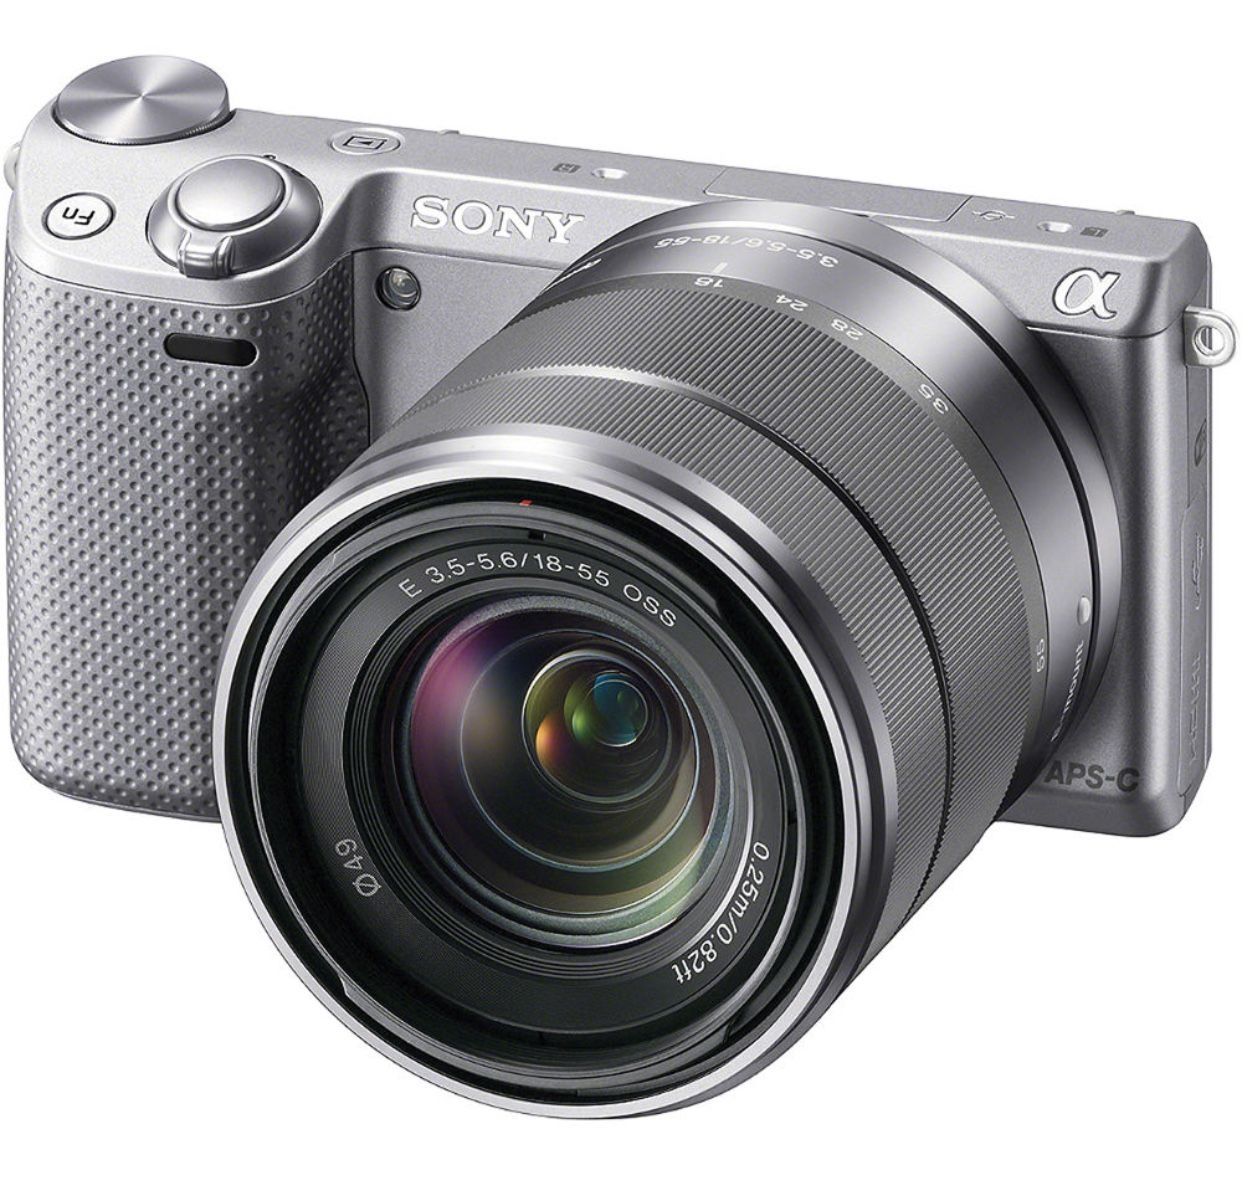 Sony NEX-5R 16.1 MP Mirrorless Digital Camera with 18-55mm Lenses (Silver)